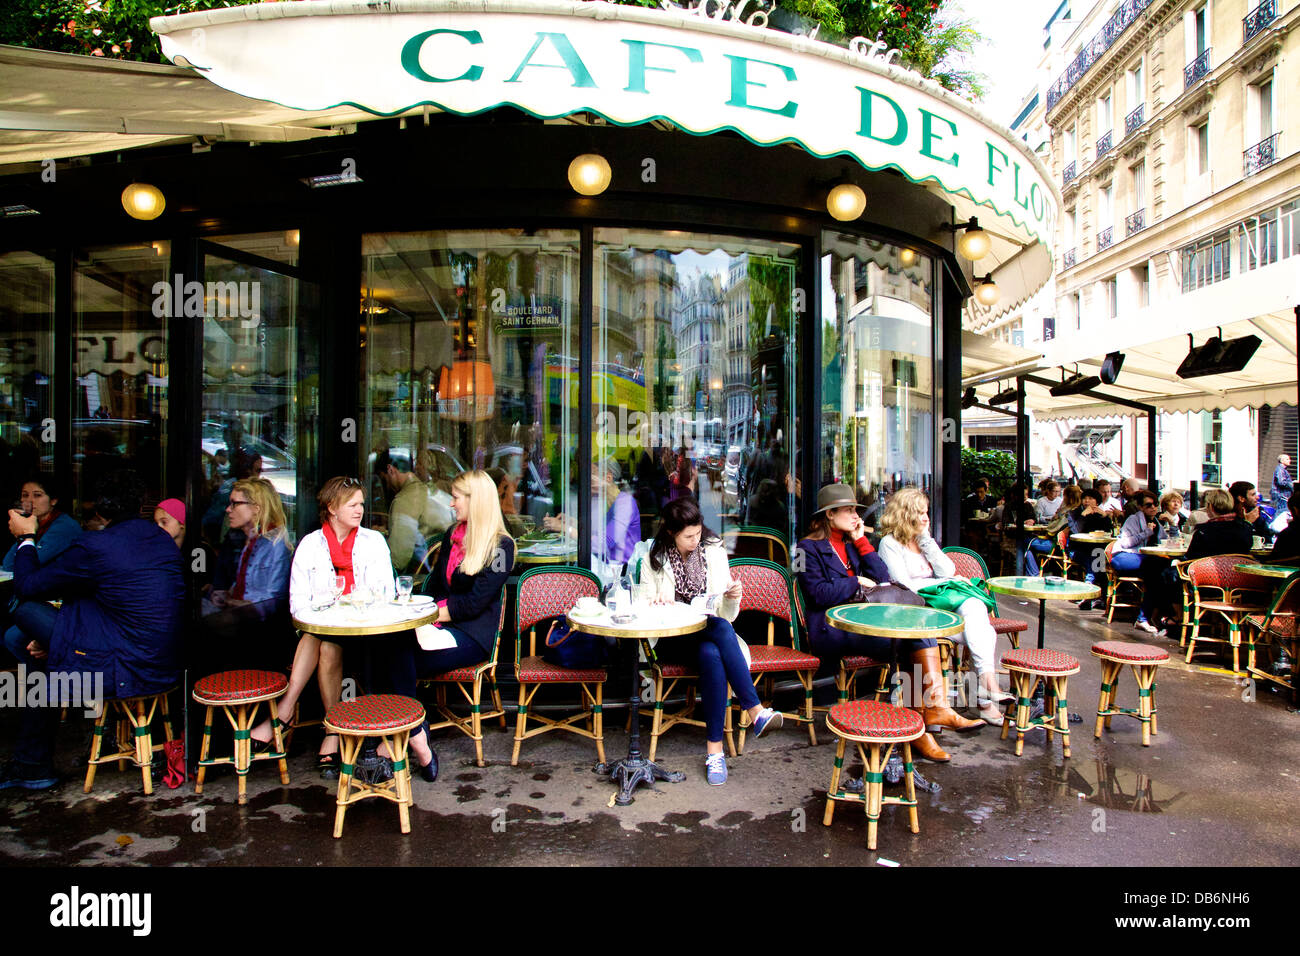 Cafe de flore paris france morning breakfast Stock Photo